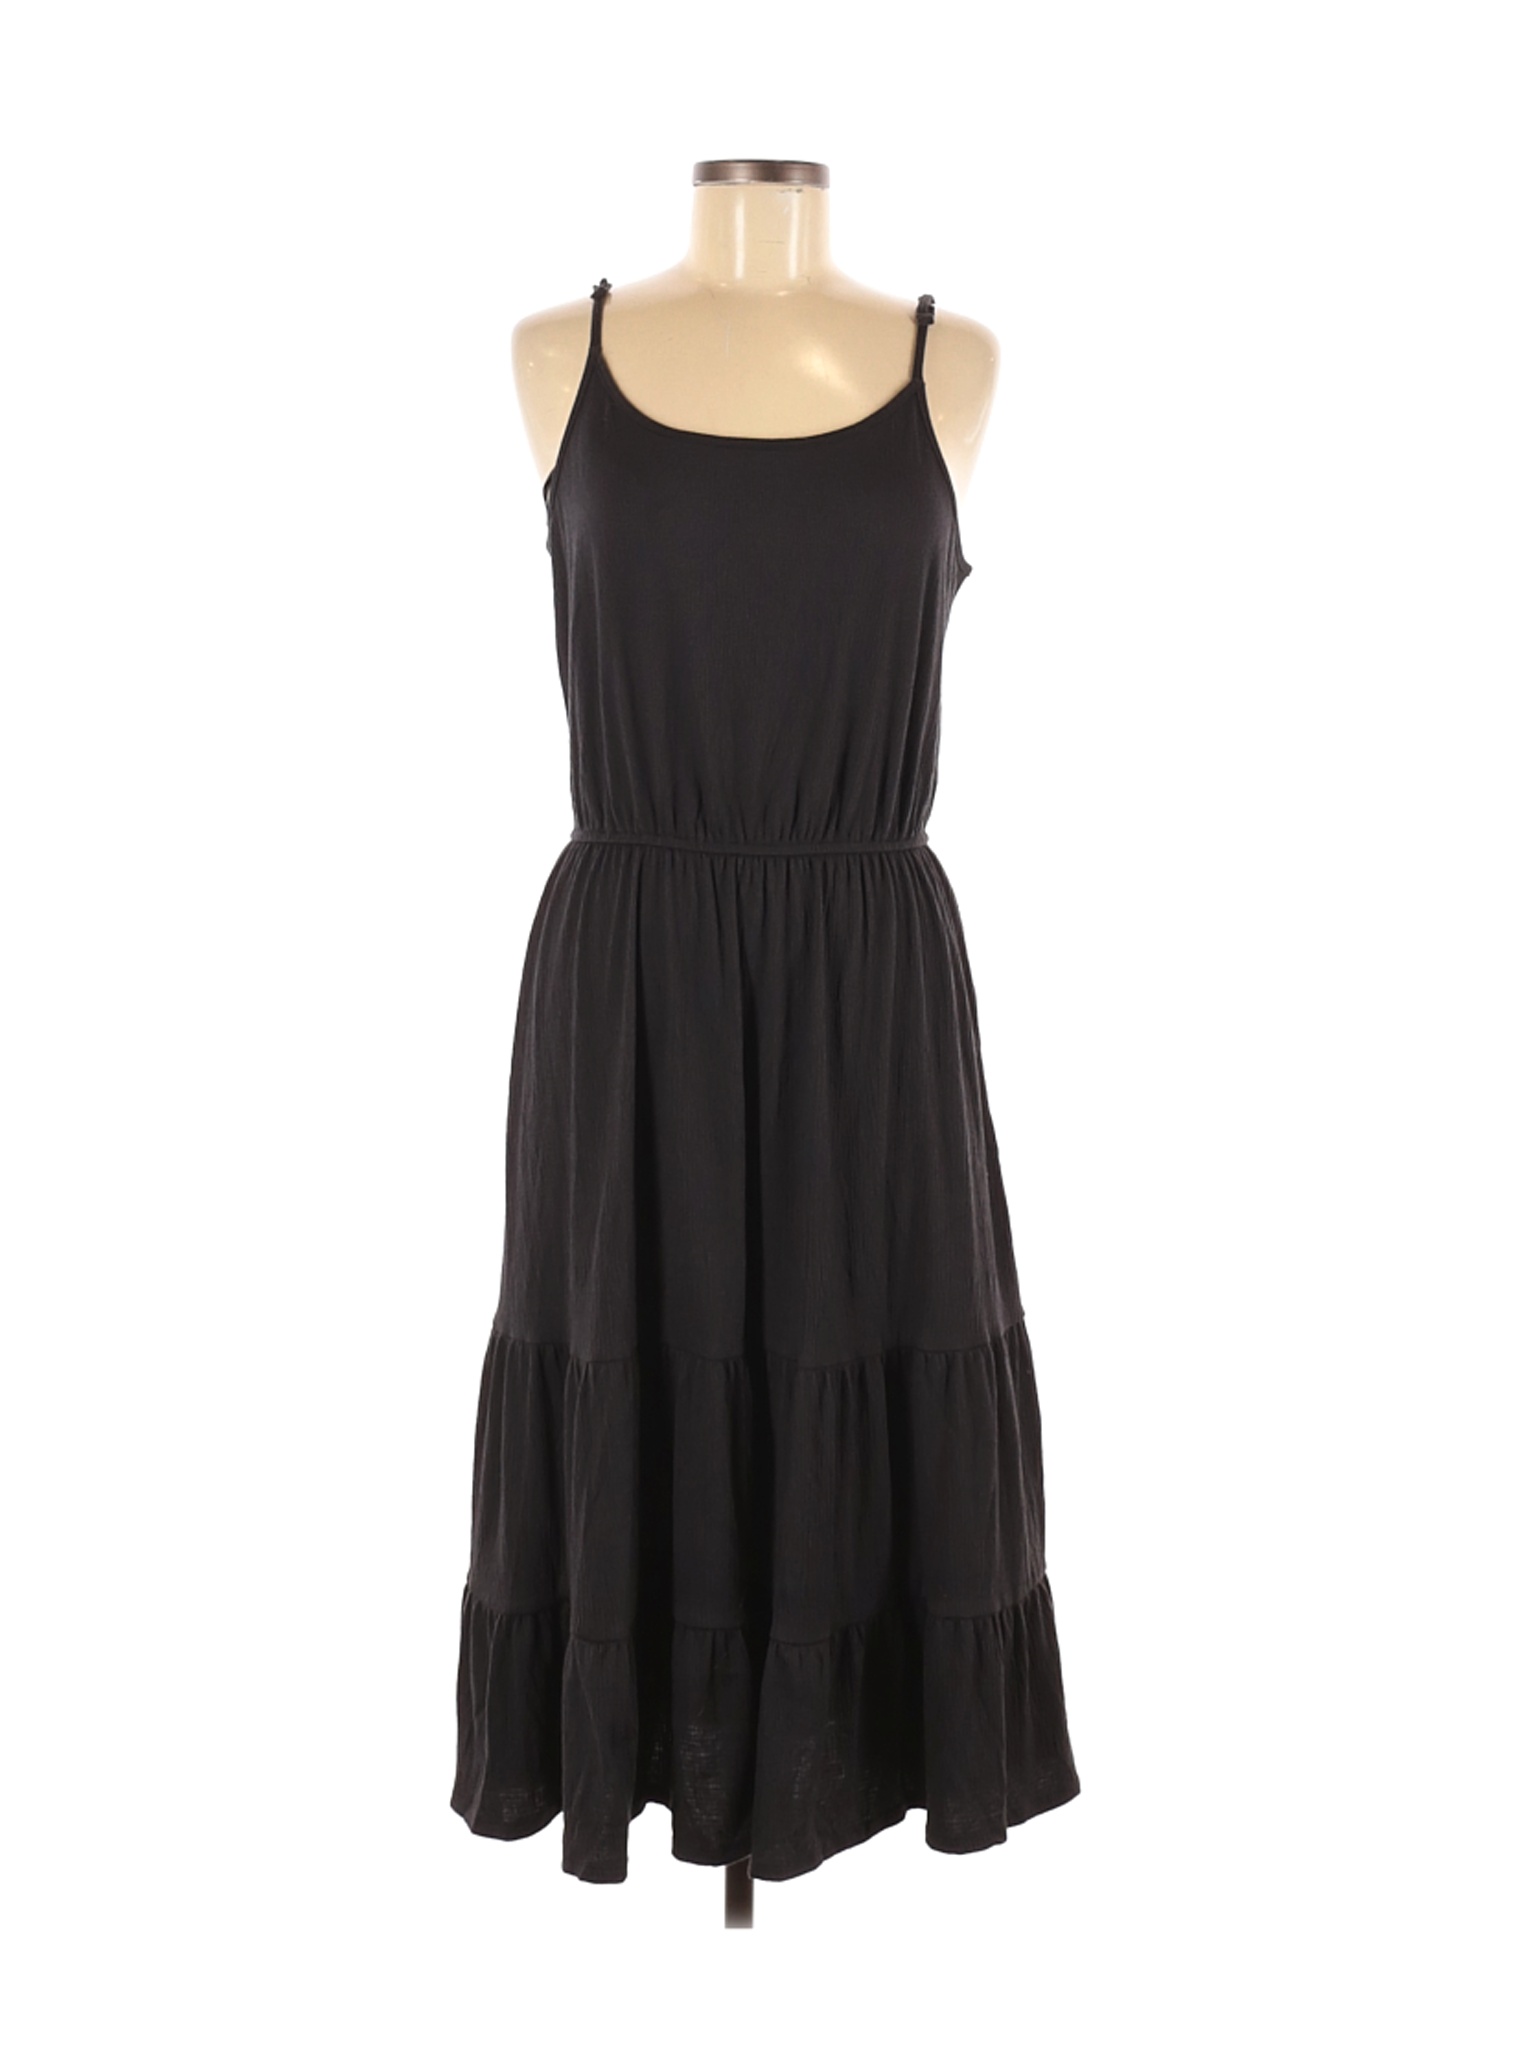 NWT Knox Rose Women Black Casual Dress M | eBay